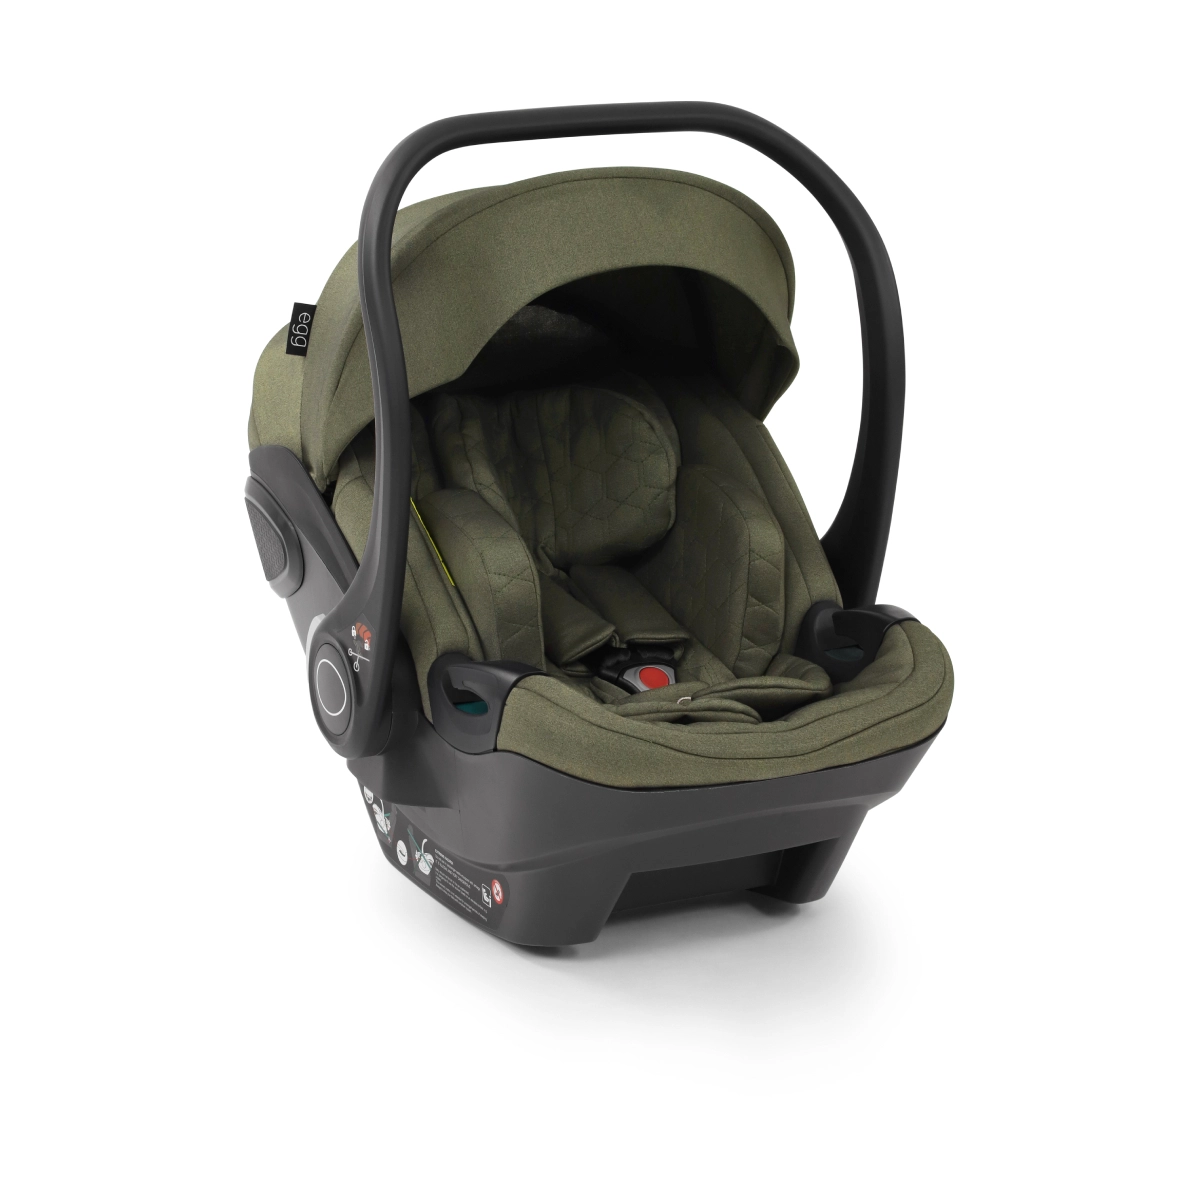 egg® 3 Shell i-Size Infant Car Seat